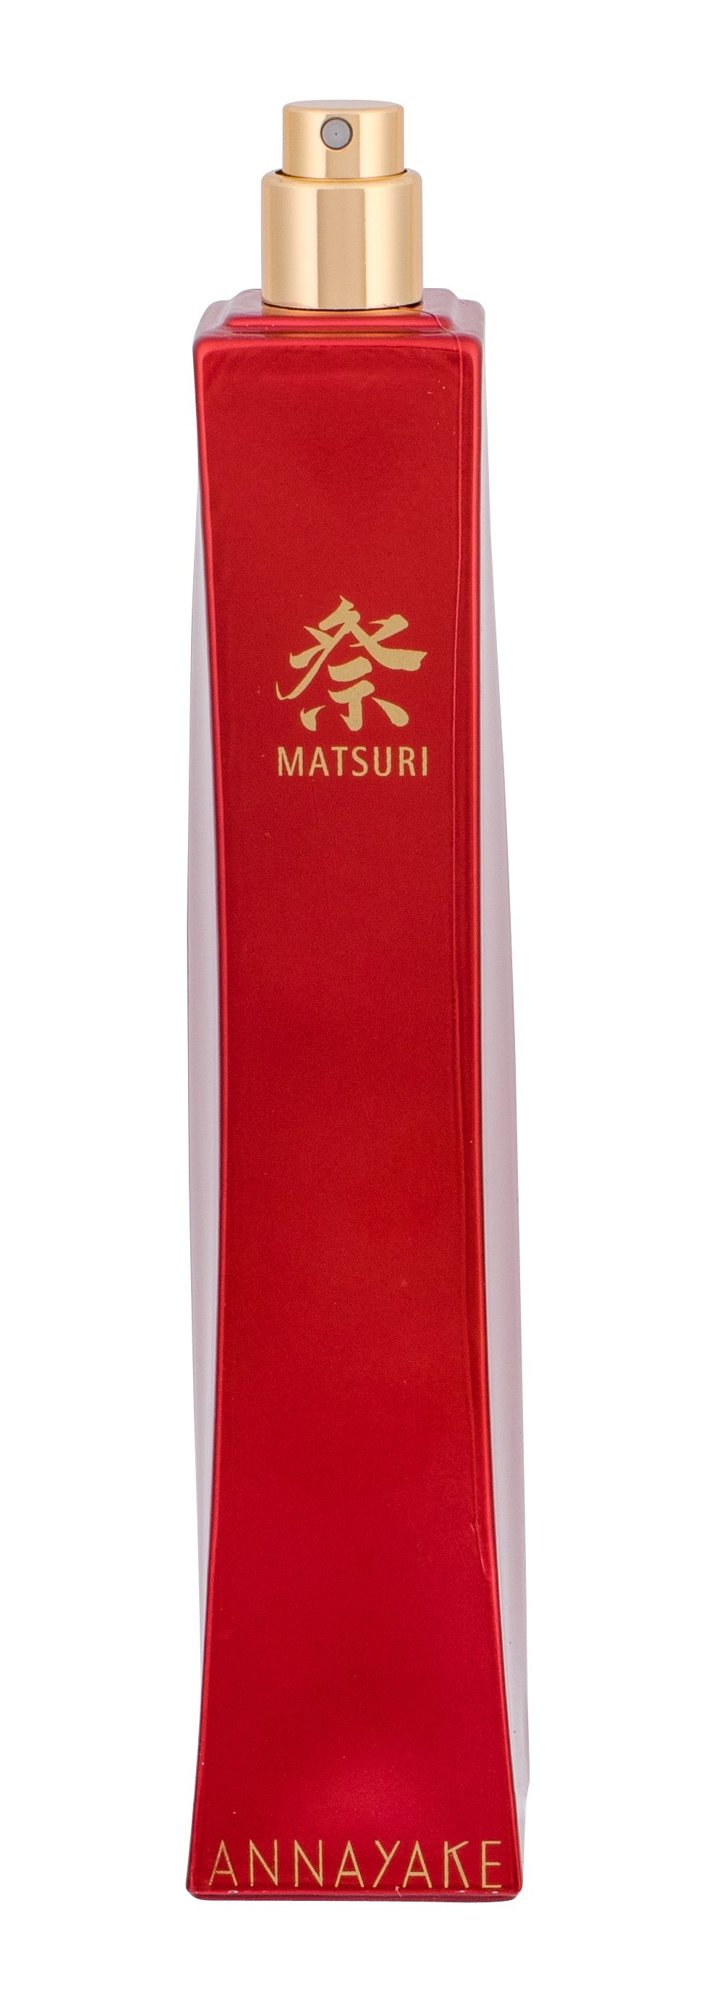 Annayake Matsuri